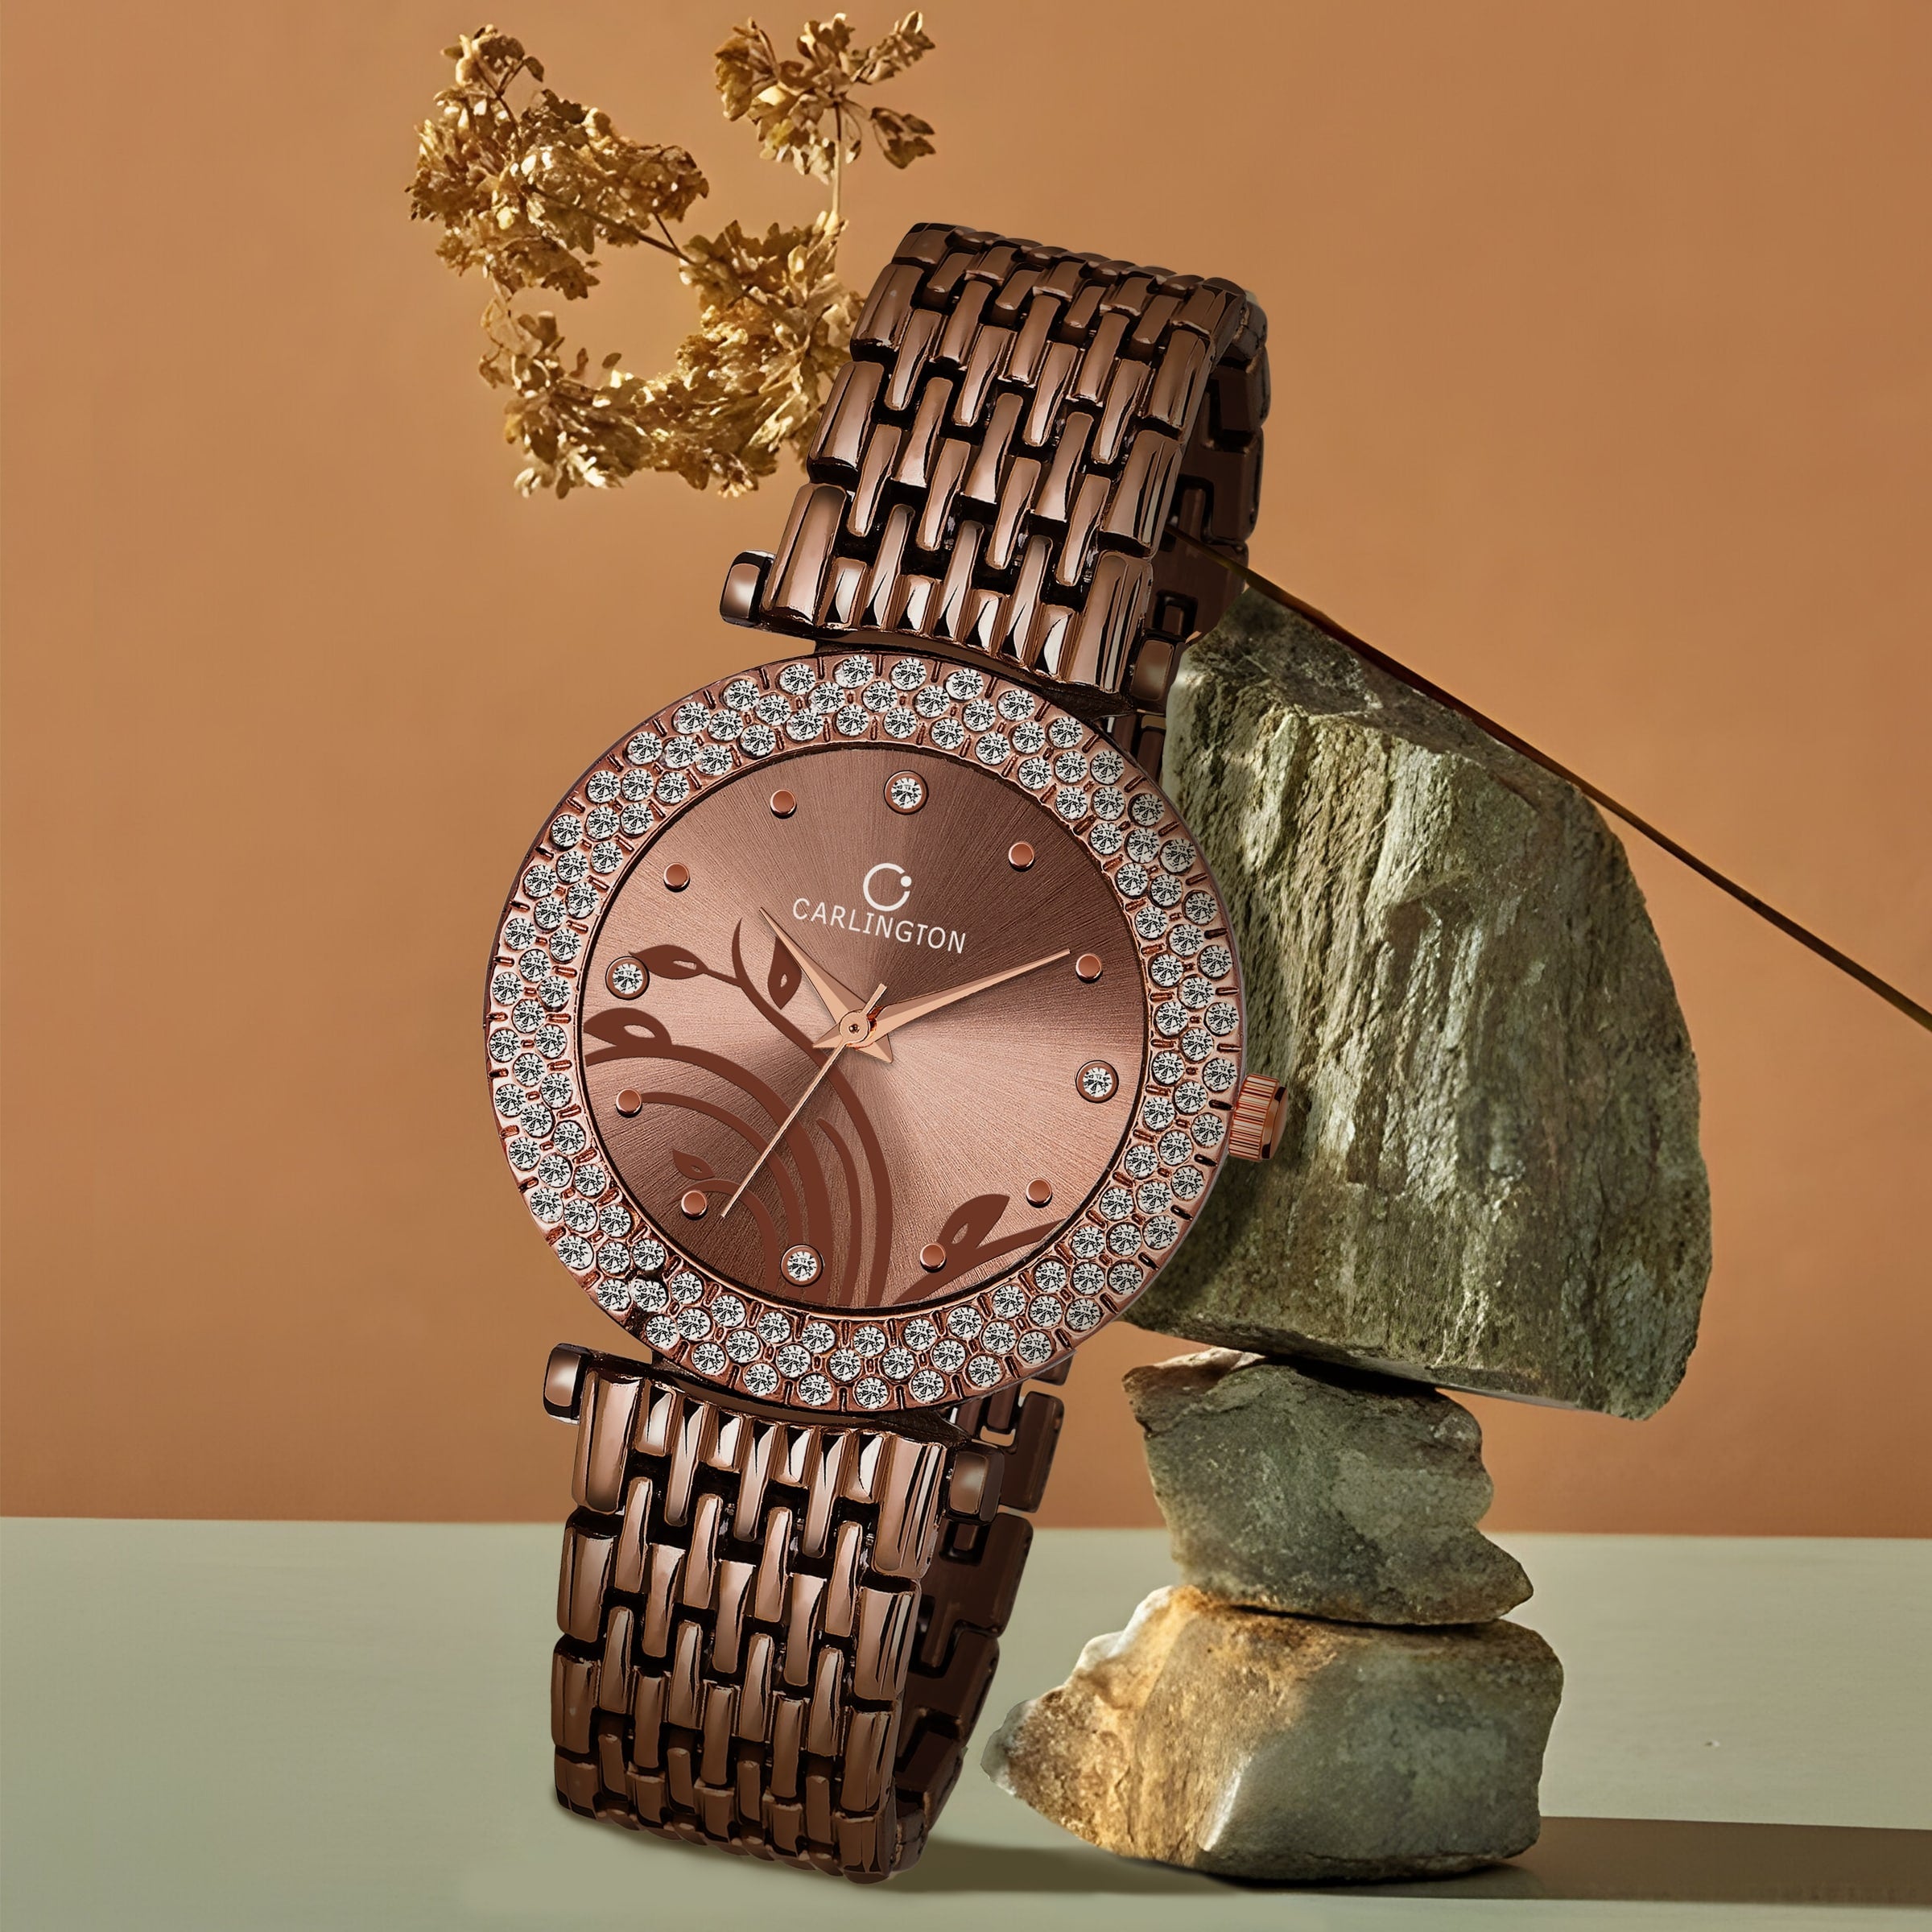 Carlington classic flower dial women's analog watch brown